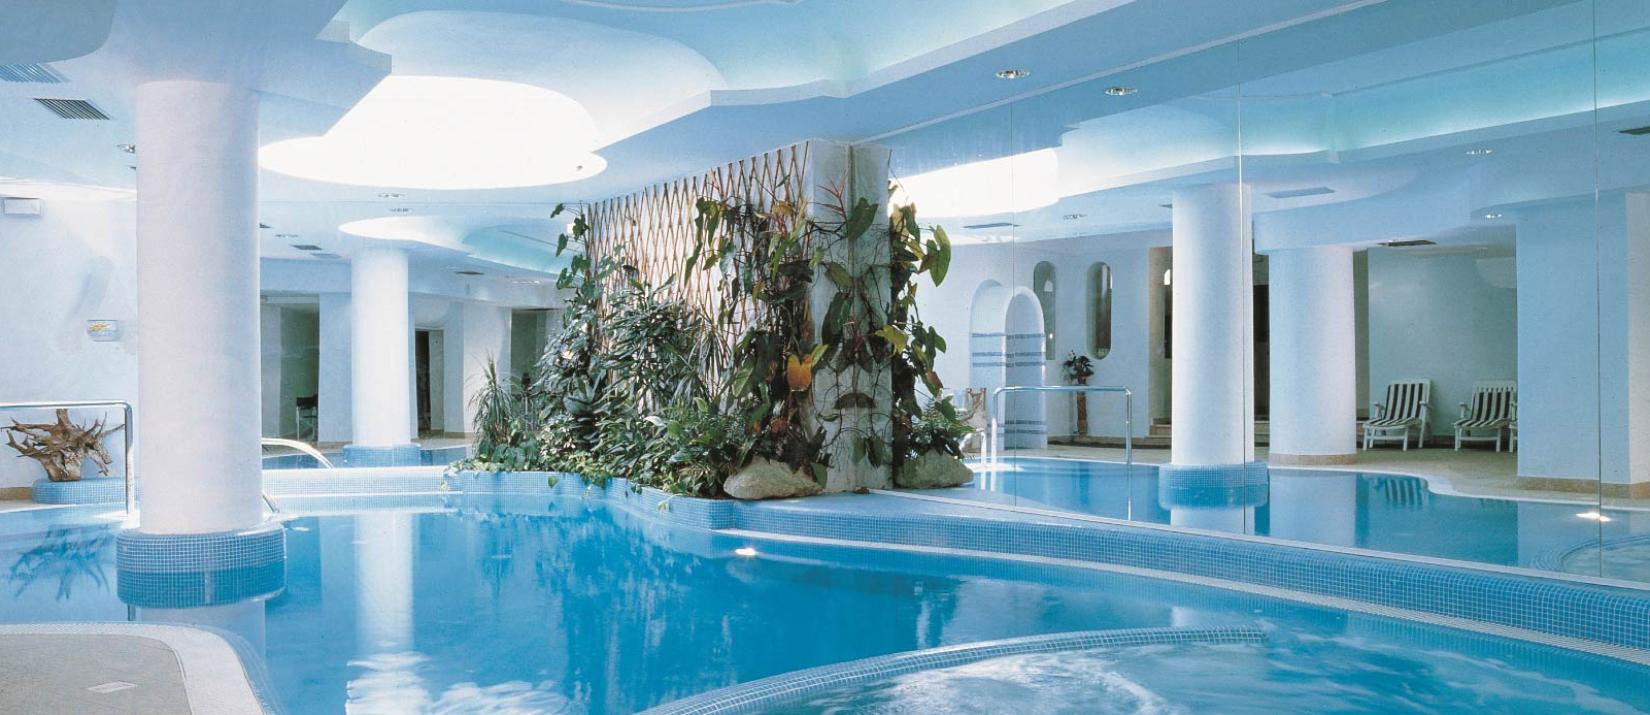 albergolapprodo it hotel-ischia-piscina-solarium-e-centro-benessere 011